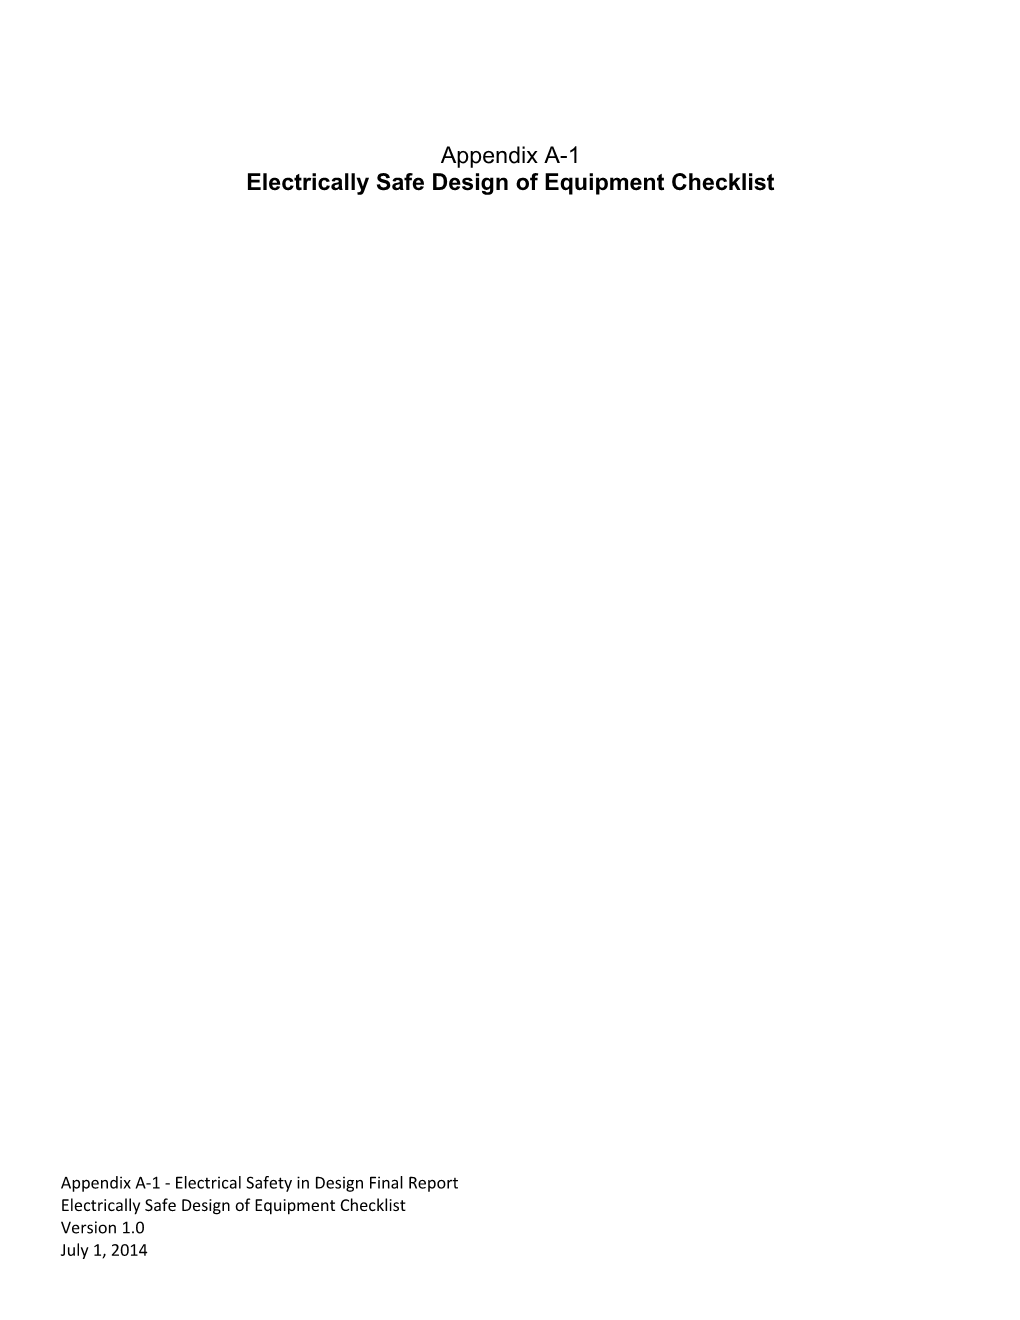 Electrically Safe Design of Equipment Checklist